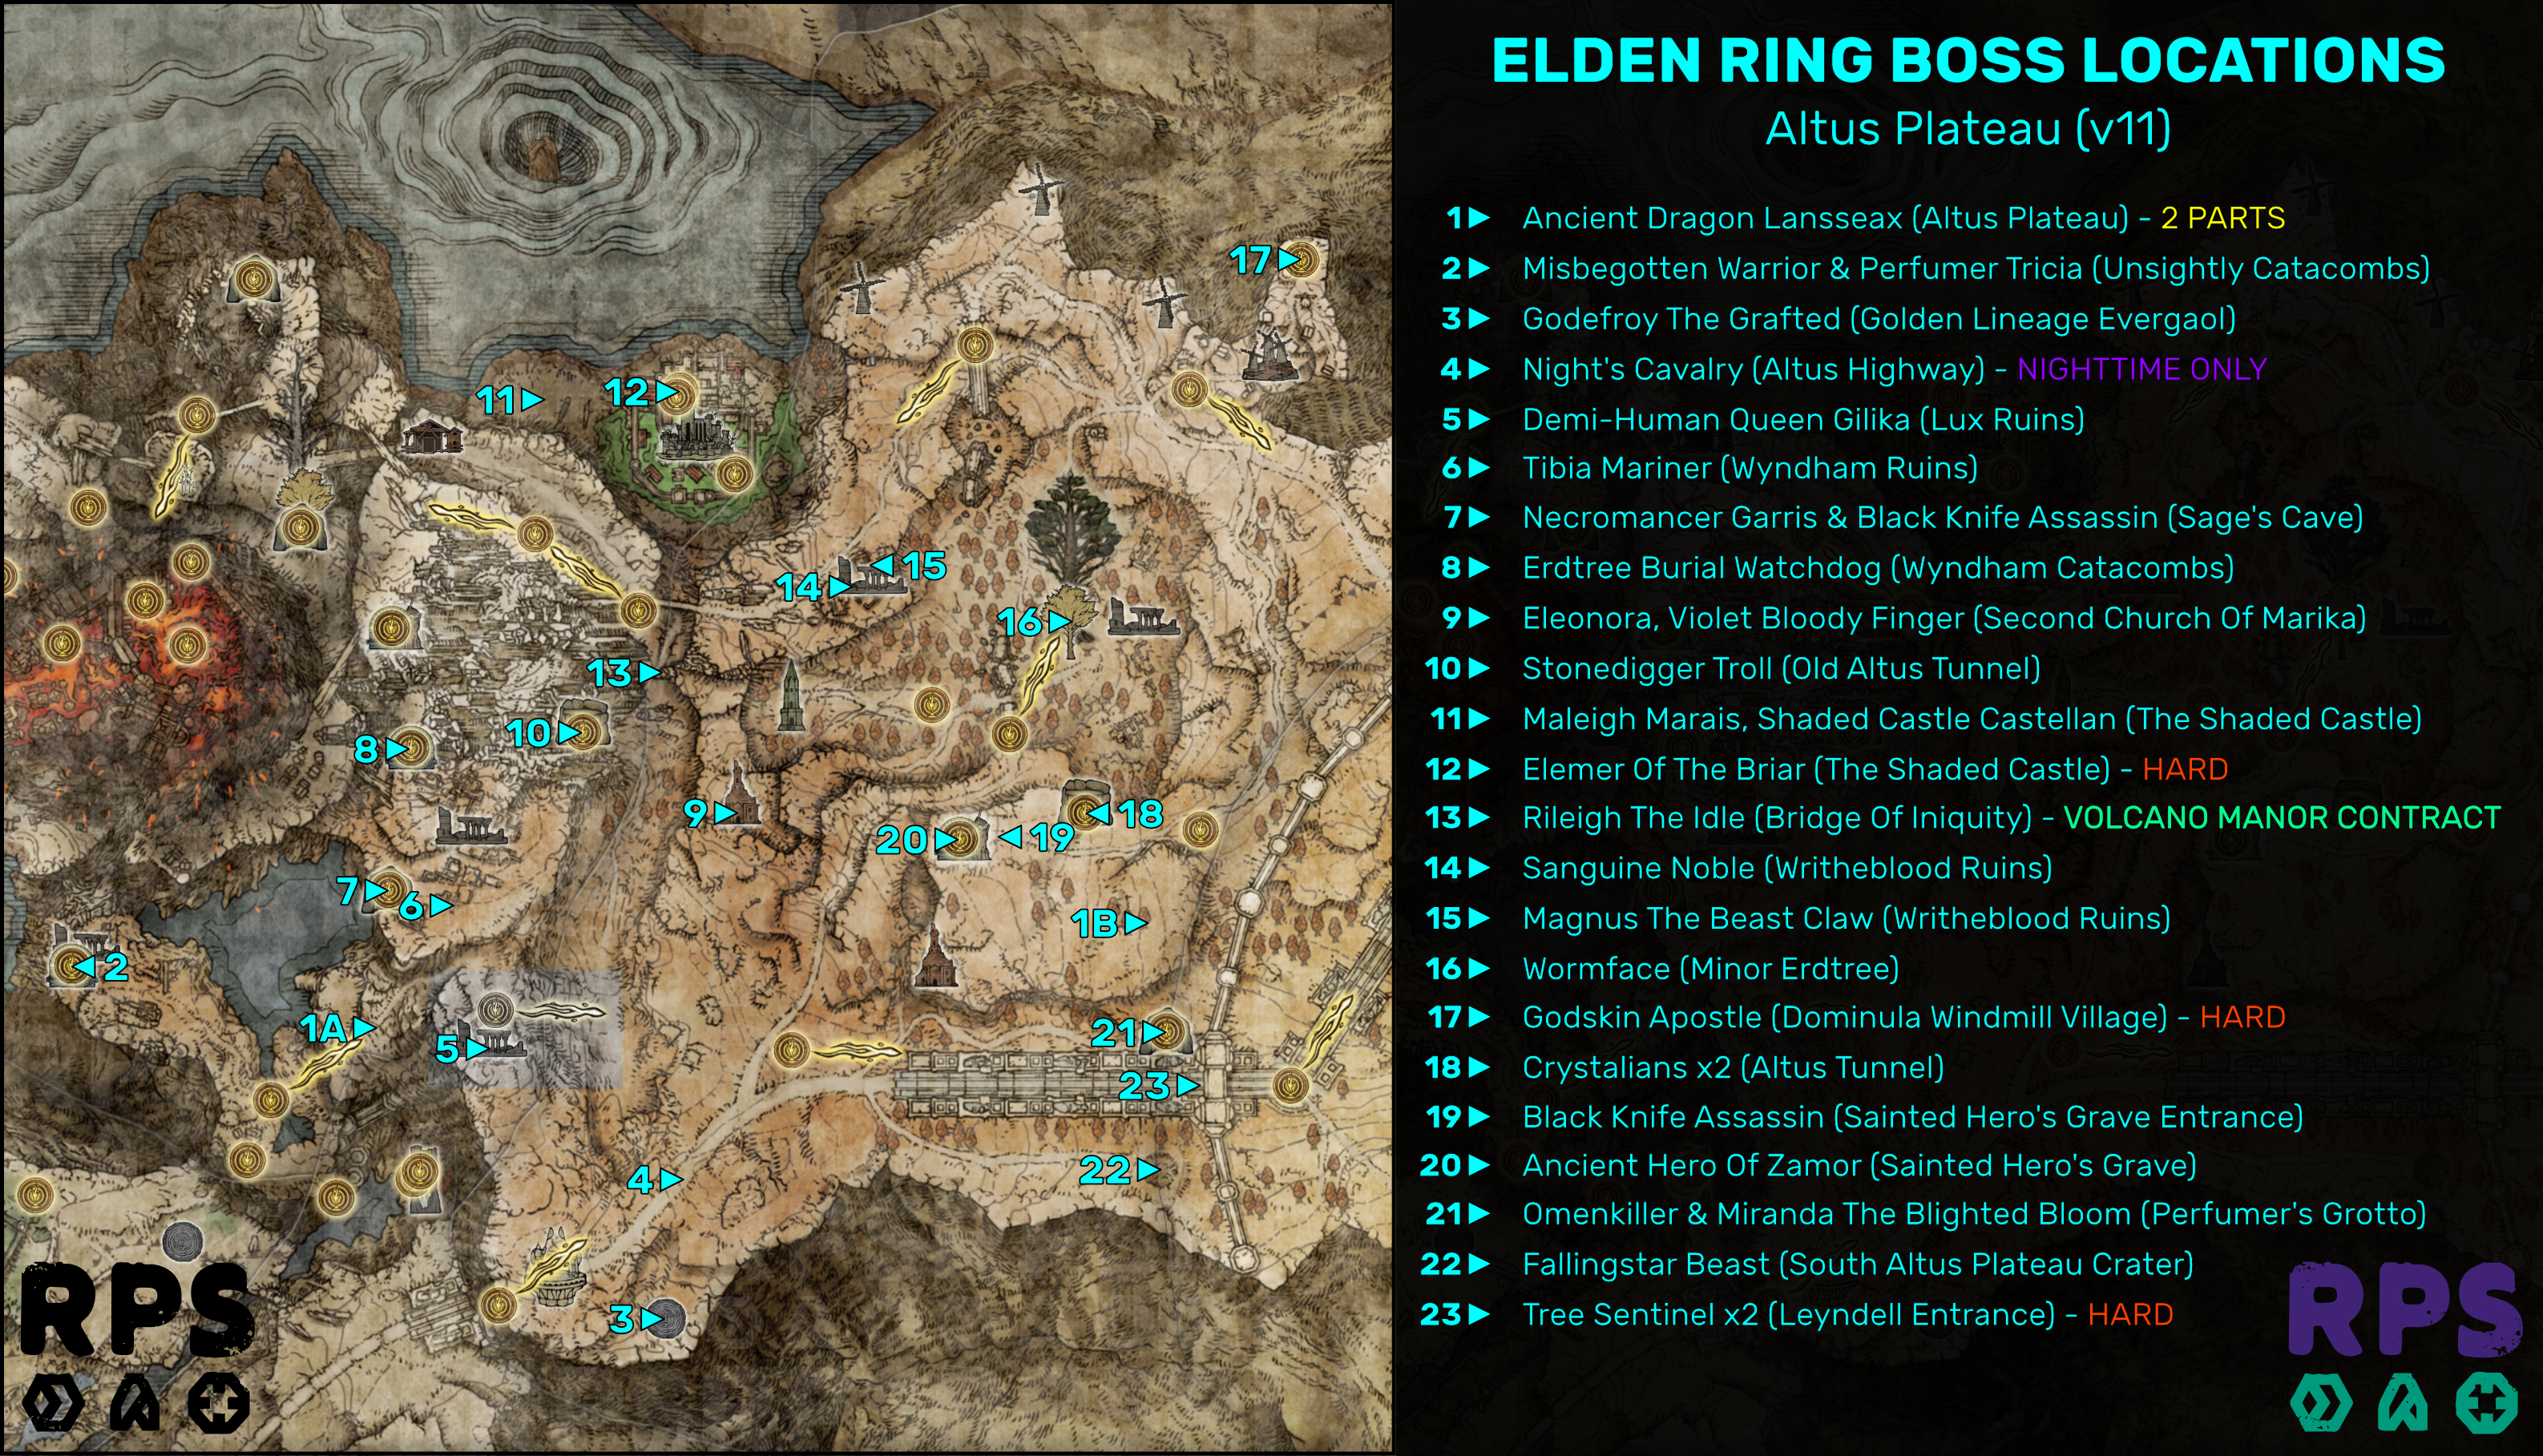 All 18 Main Bosses in Elden Ring Listed in Order